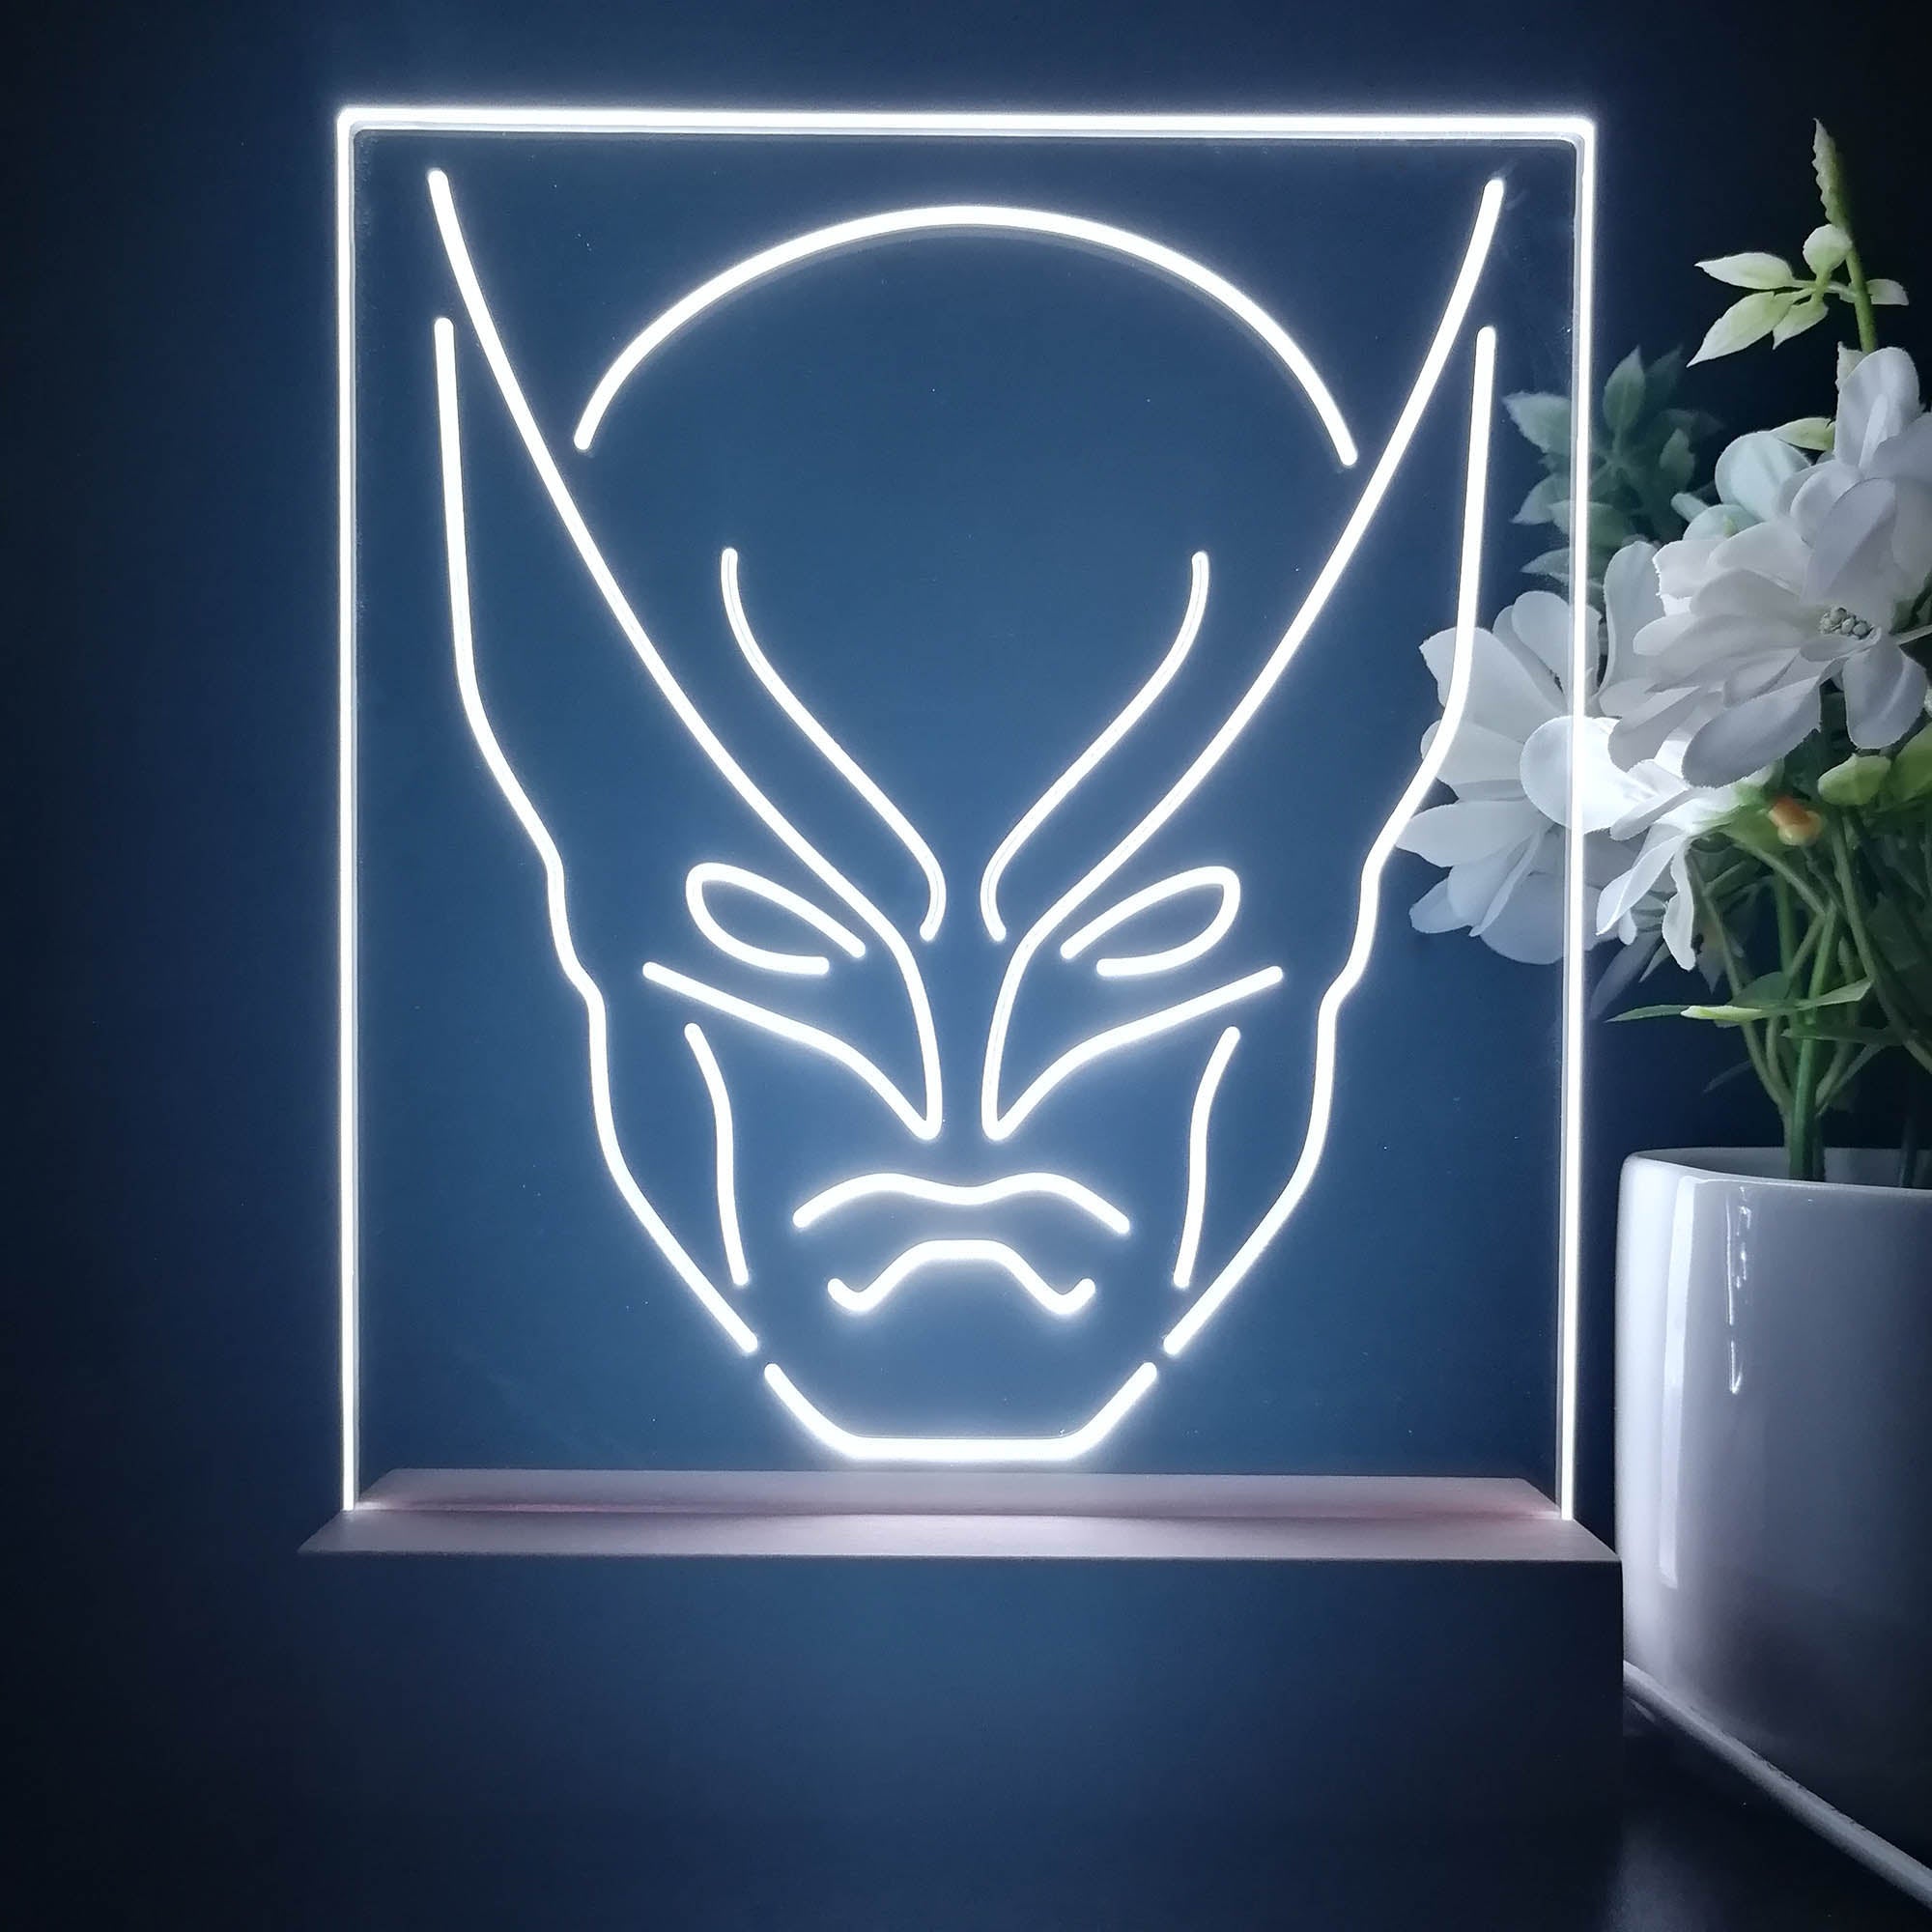 X-Men Wolverine Marvels 3D Illusion Night Light Desk Lamp